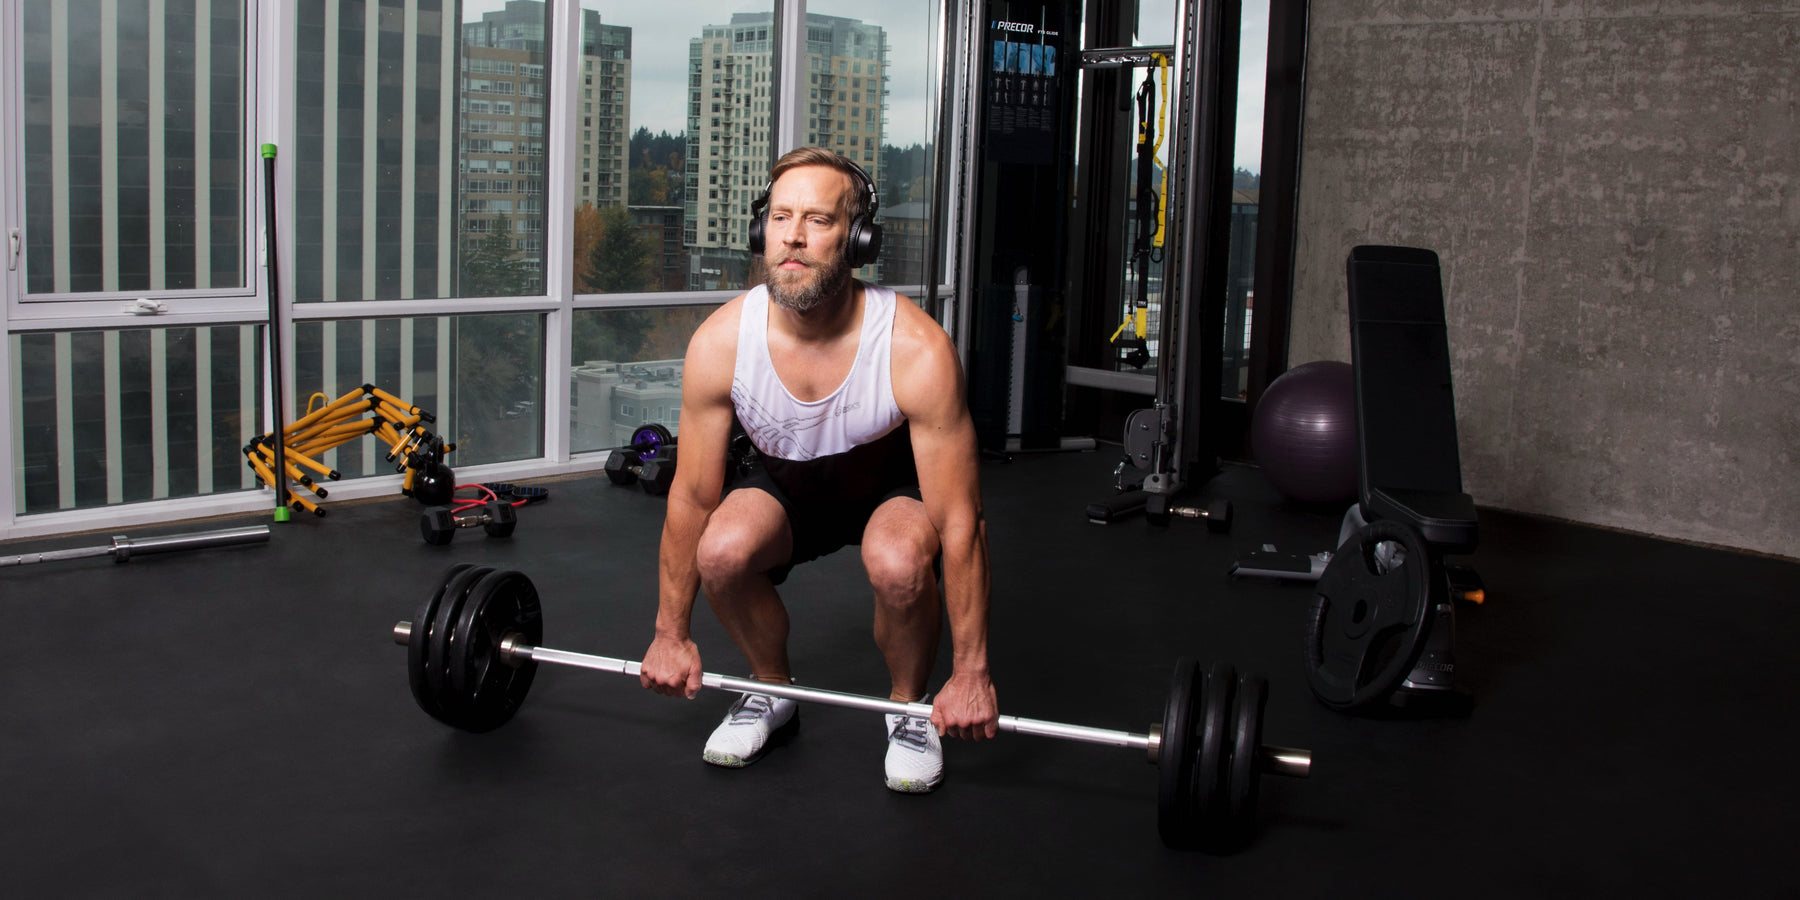 Male exerciser strength training with barbell deadlift using Precor strength equipment